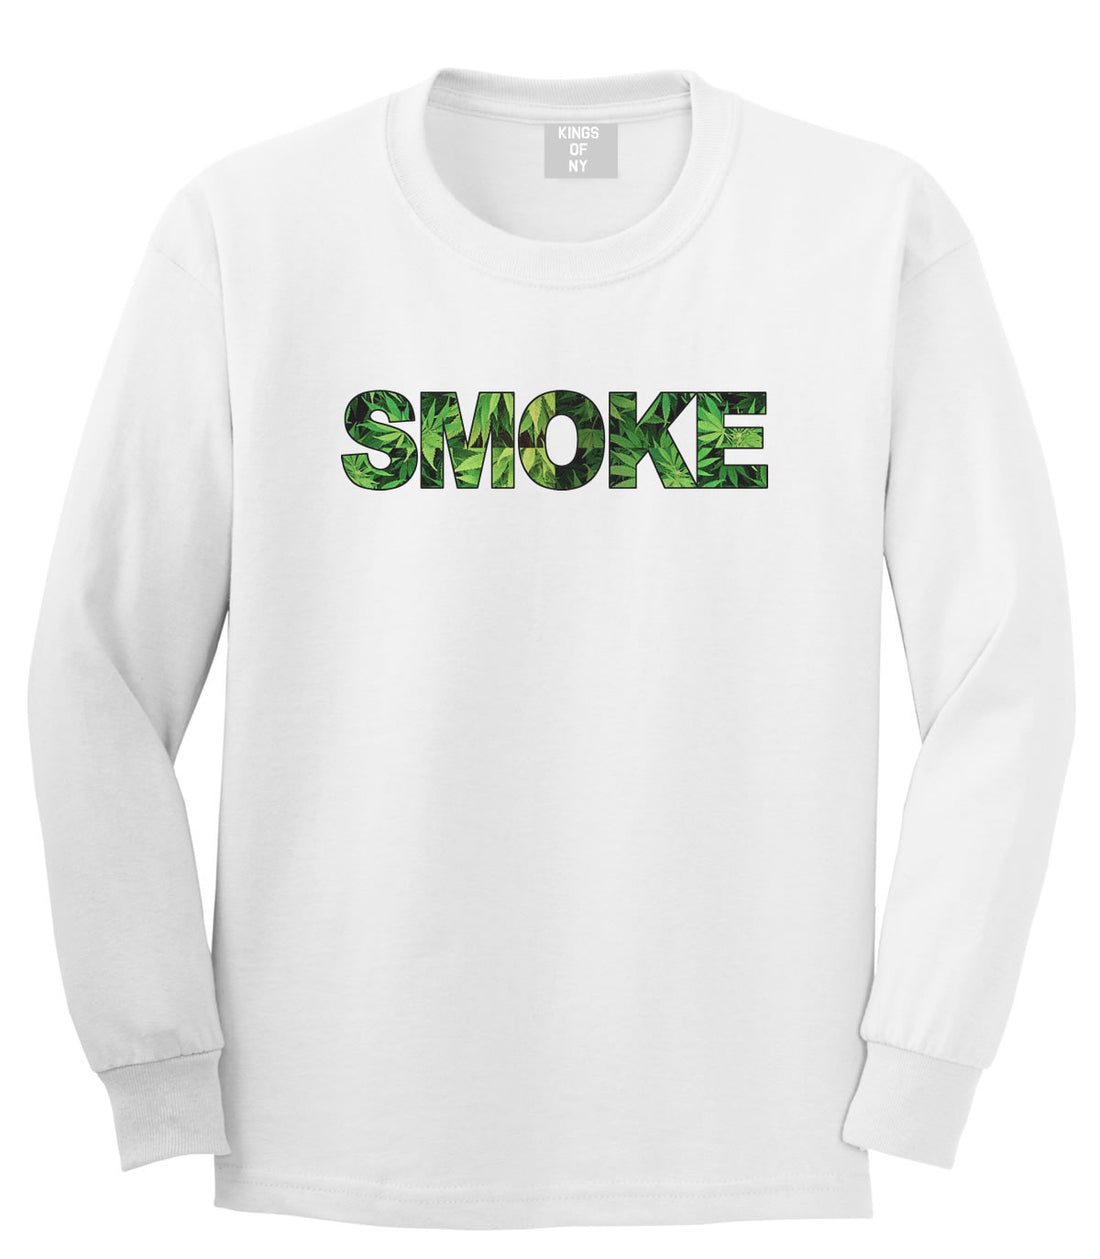 Smoke Weed Marijuana Print Long Sleeve T-Shirt in White by Kings Of NY